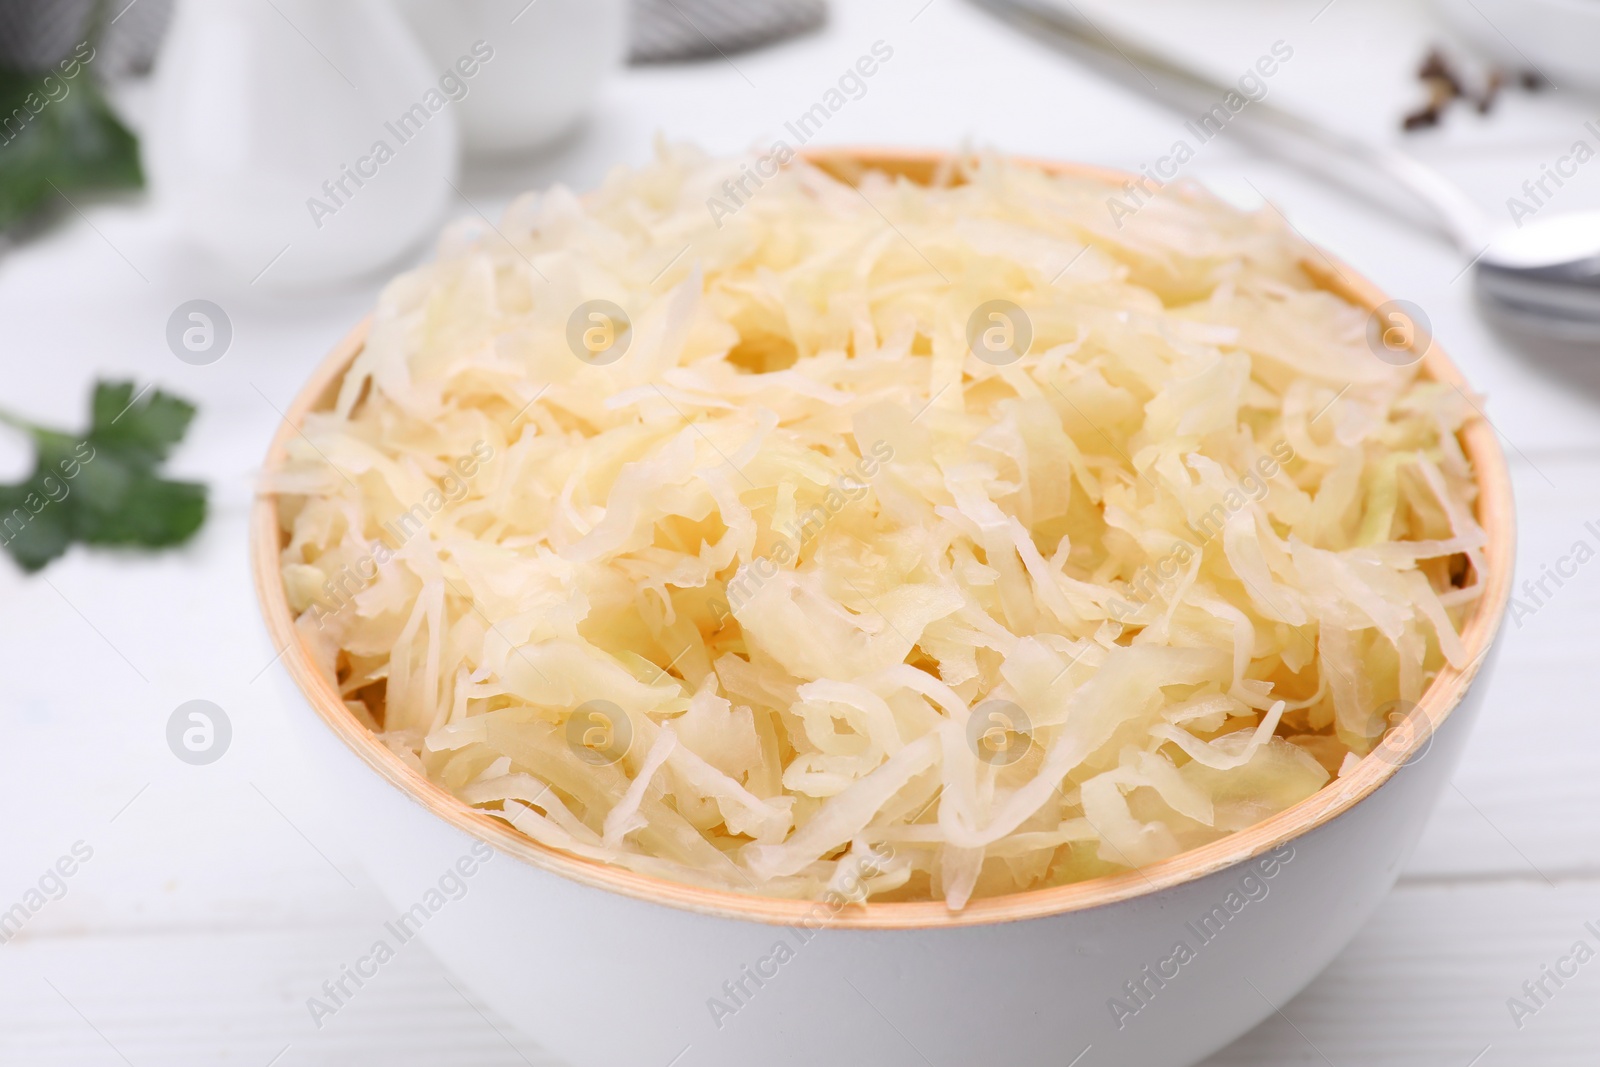 Photo of Bowl of tasty sauerkraut on white wooden table, closeup